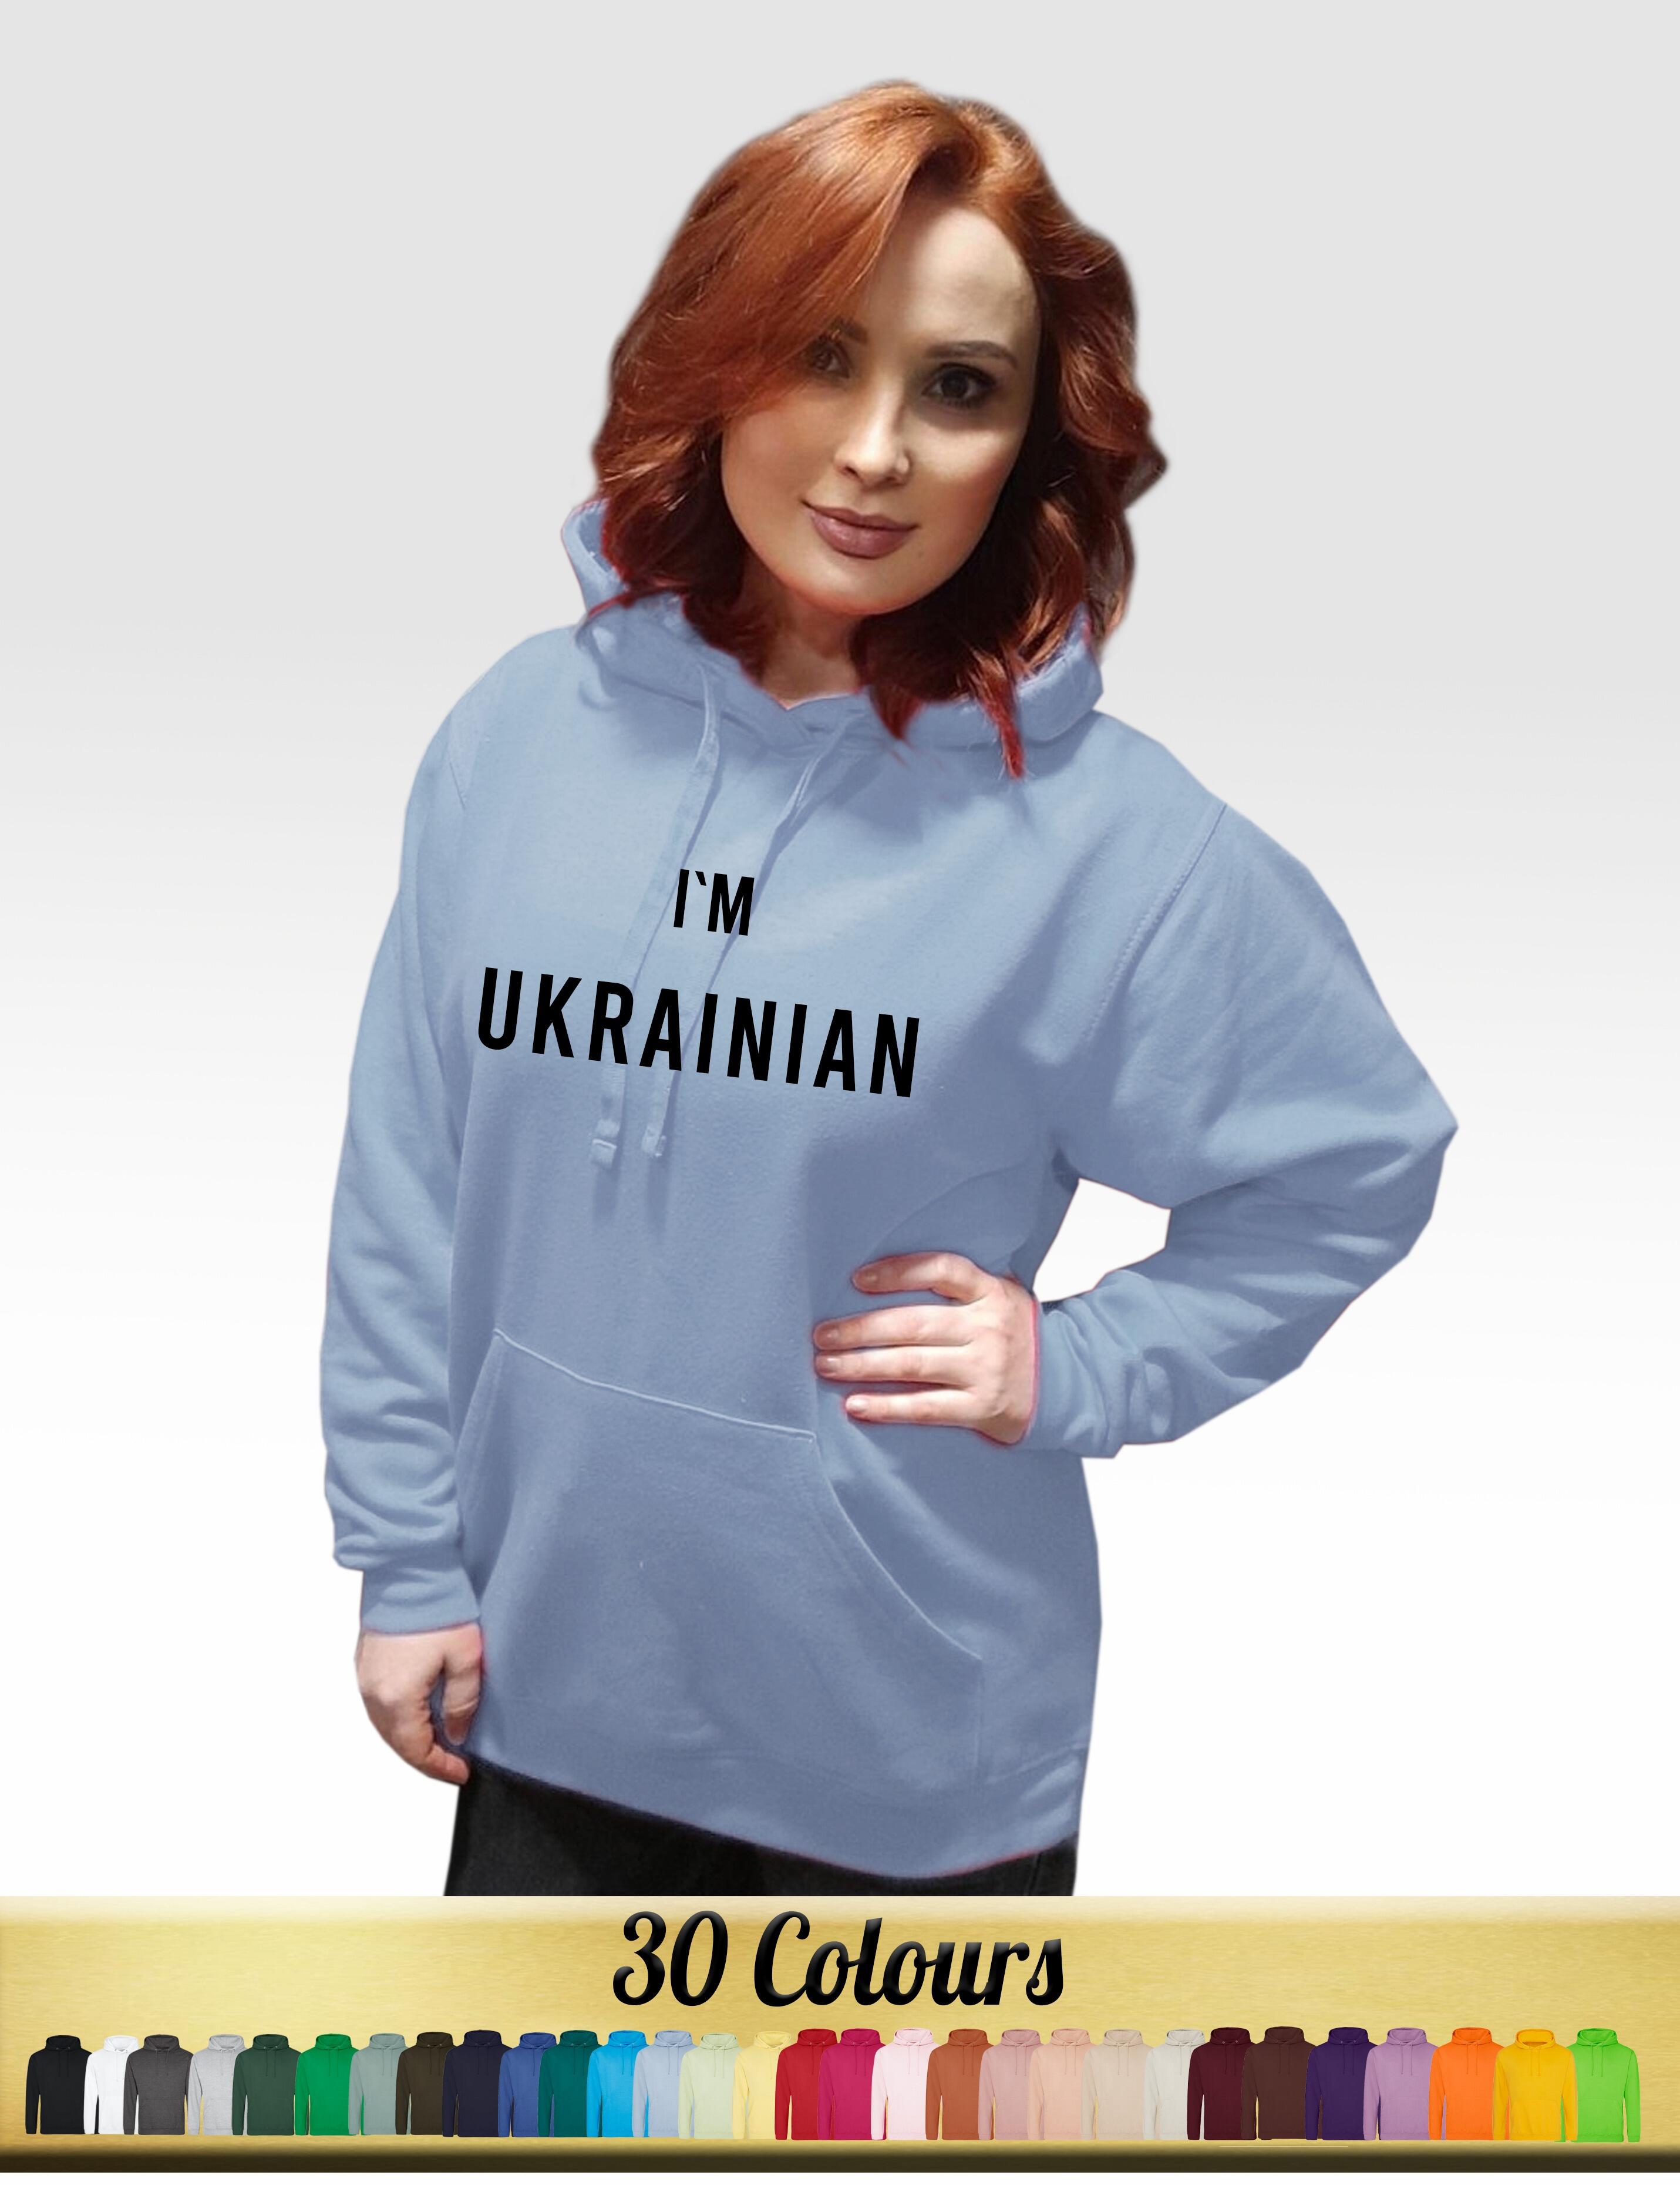 I'm Ukrainian Hoodie